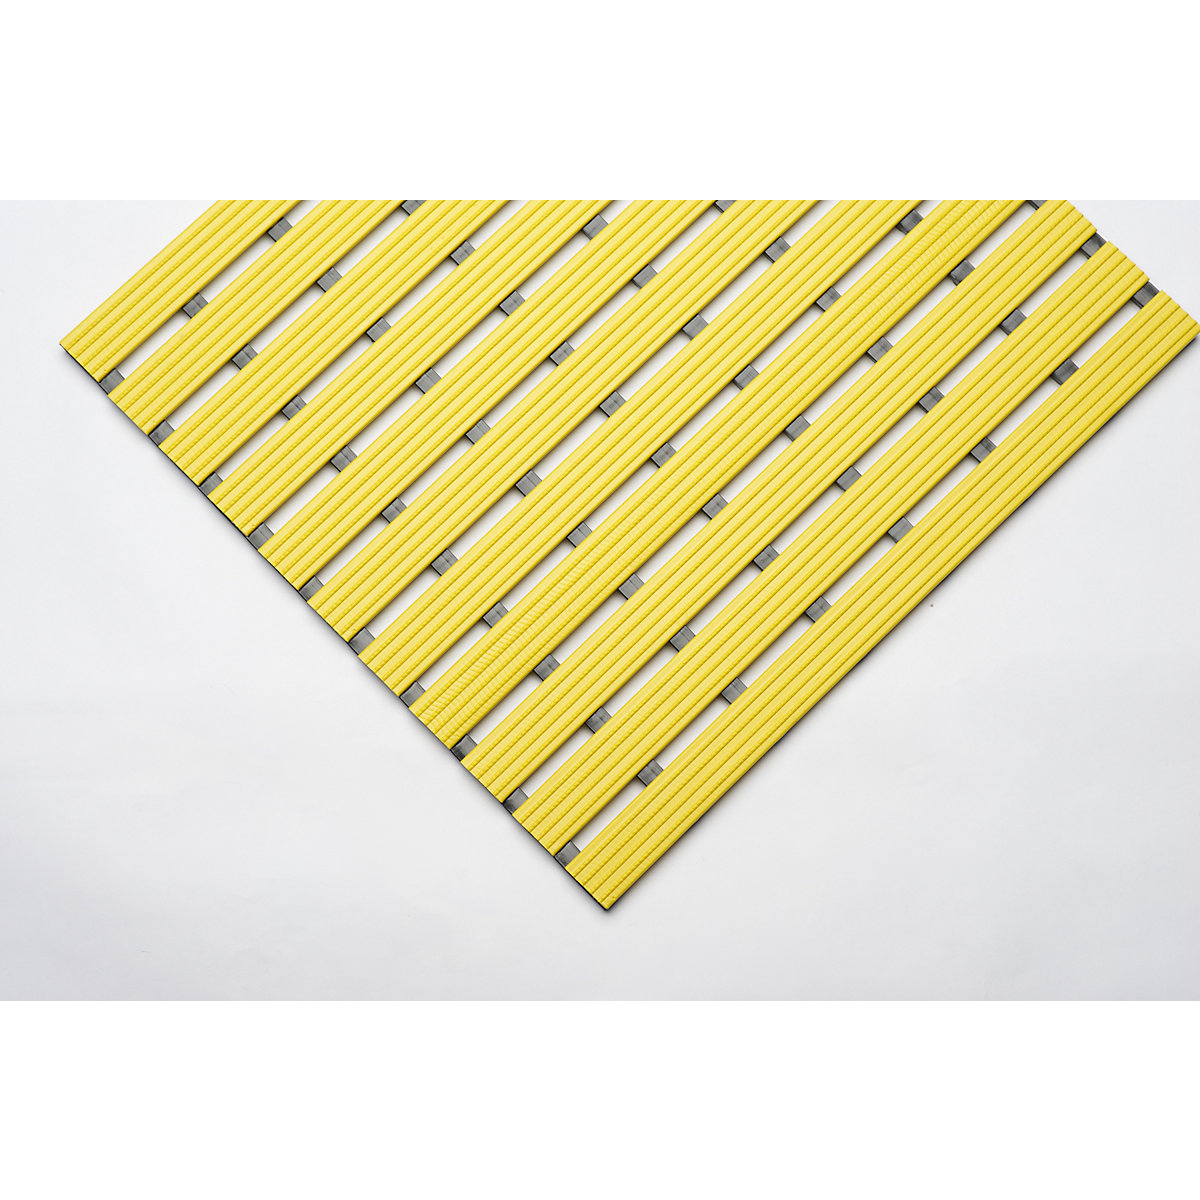 Kunststof mat, per str. mtr., loopvlak van harde kunststof, antislip, breedte 600 mm, geel-7